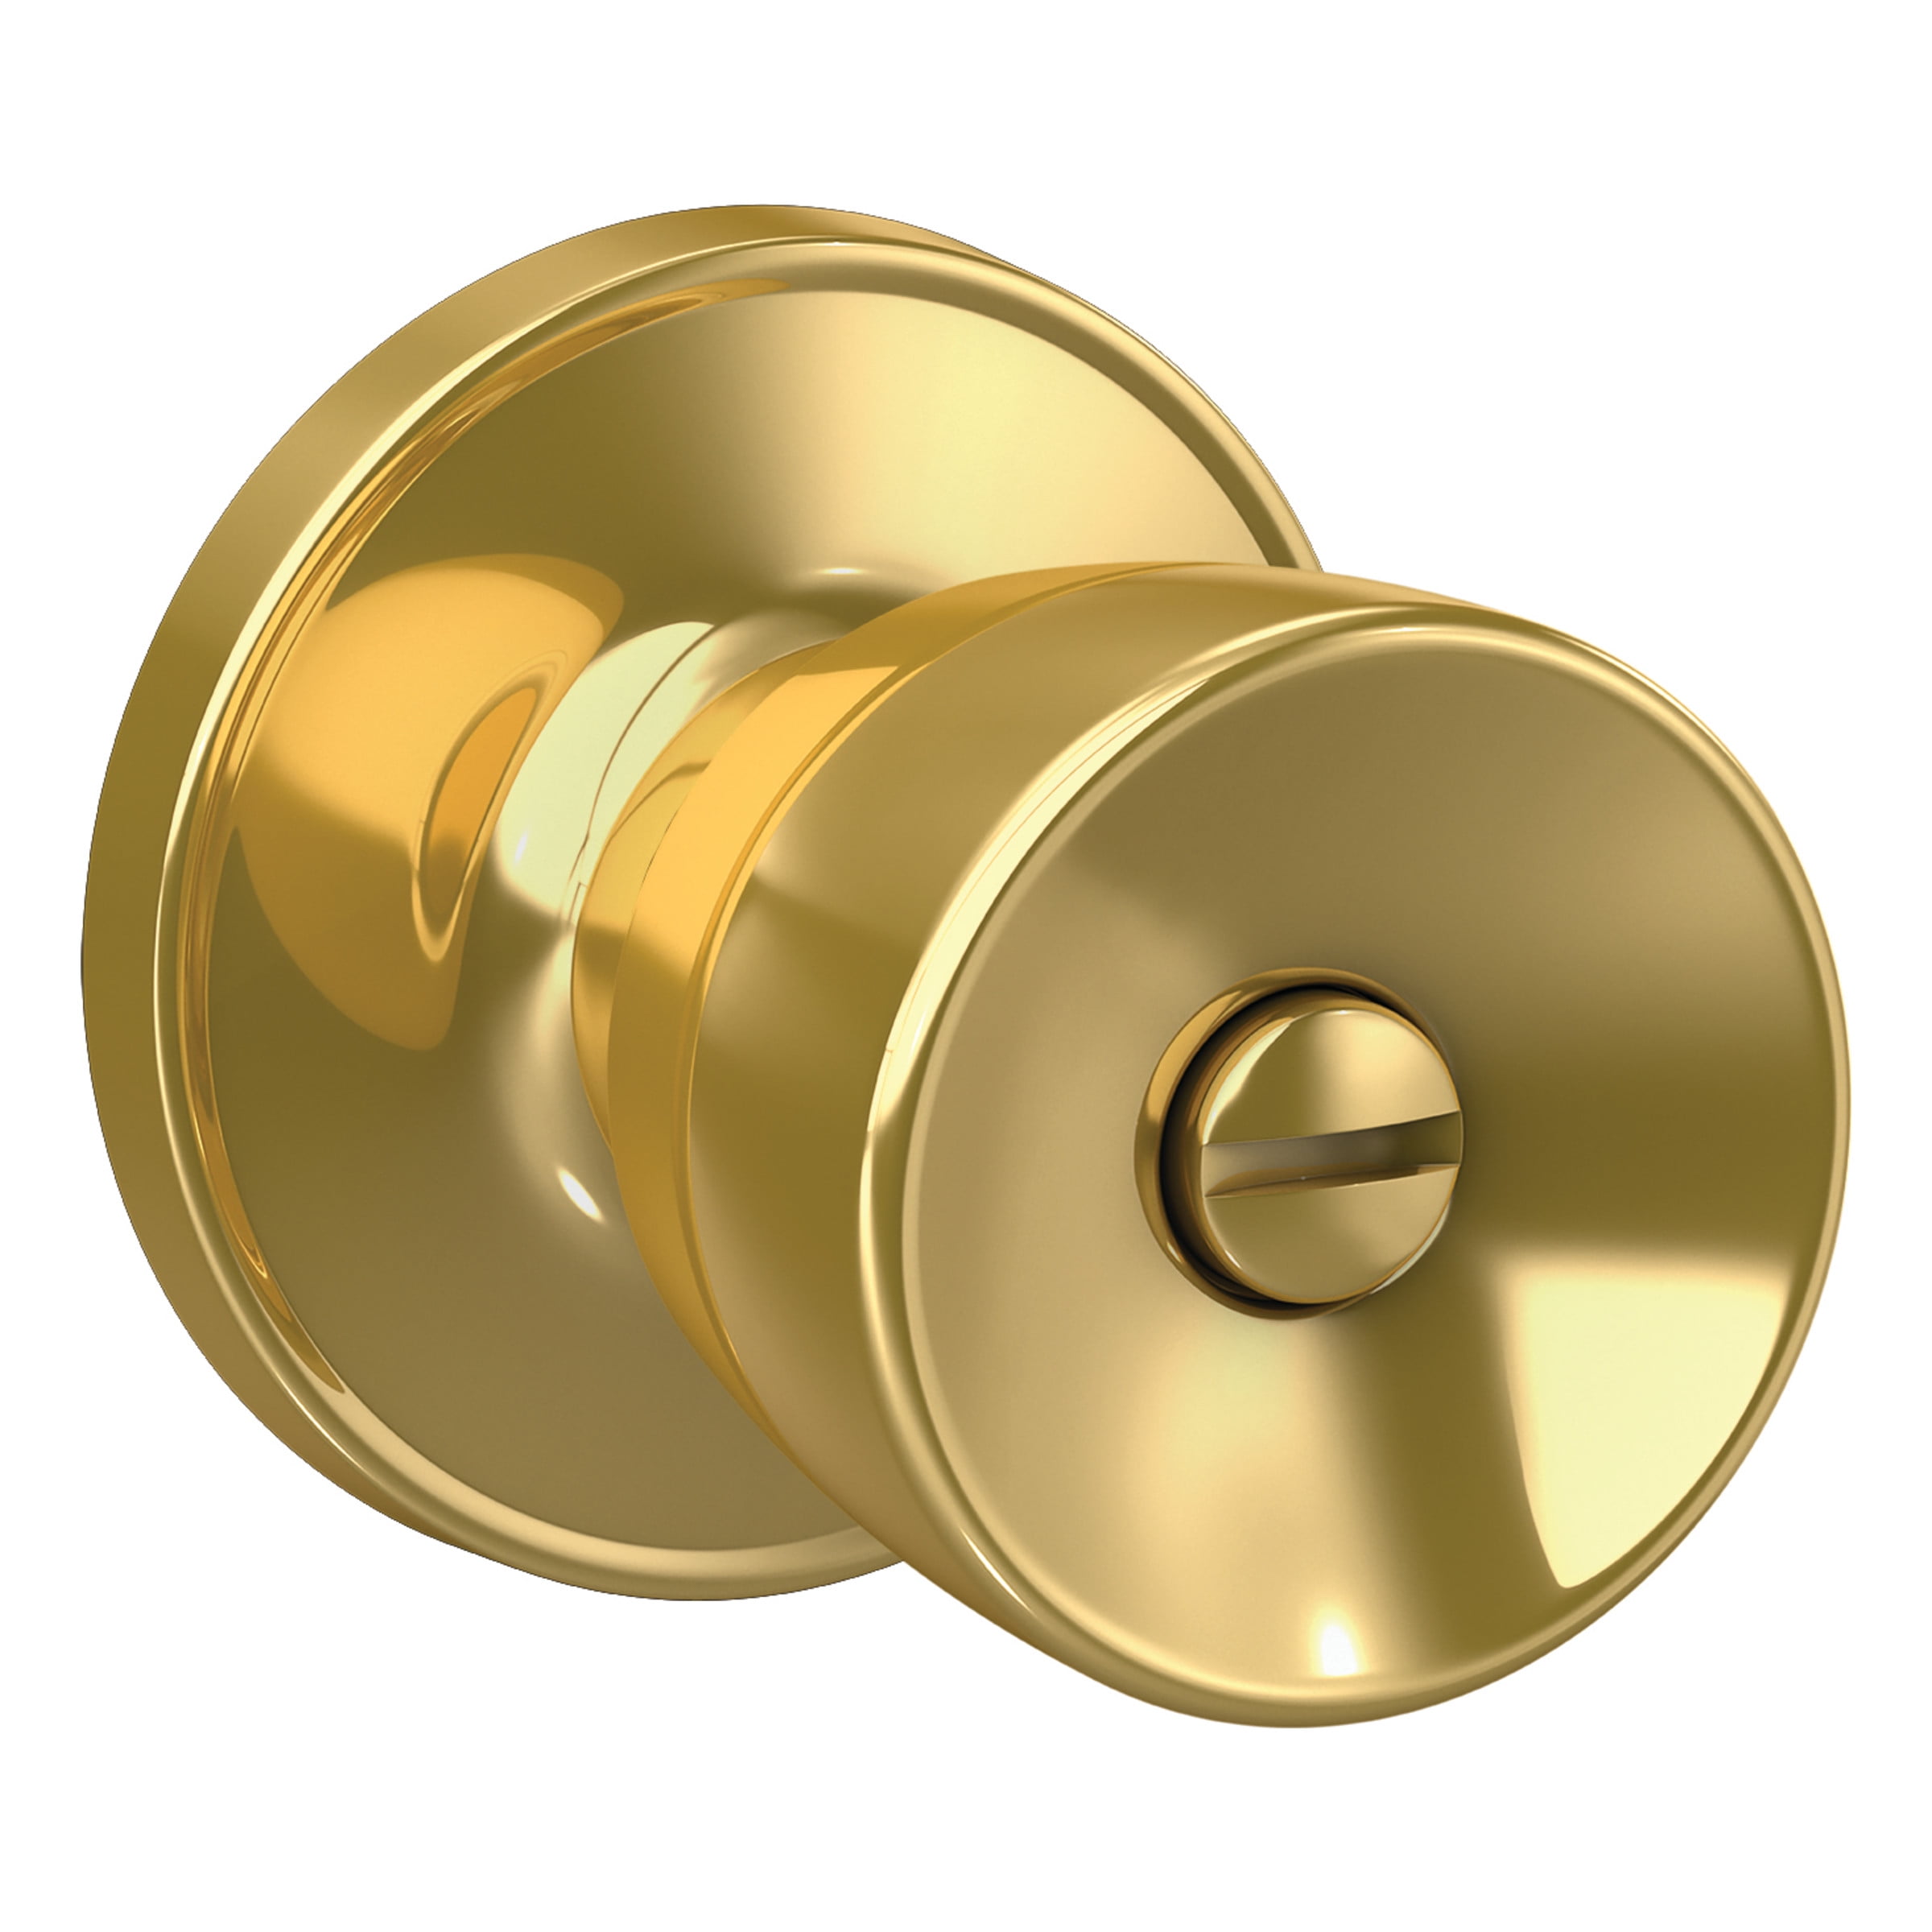 Lot of 10 Polished Brass Privacy Lever Handle Door Locks for Bedroom or Bathroom 